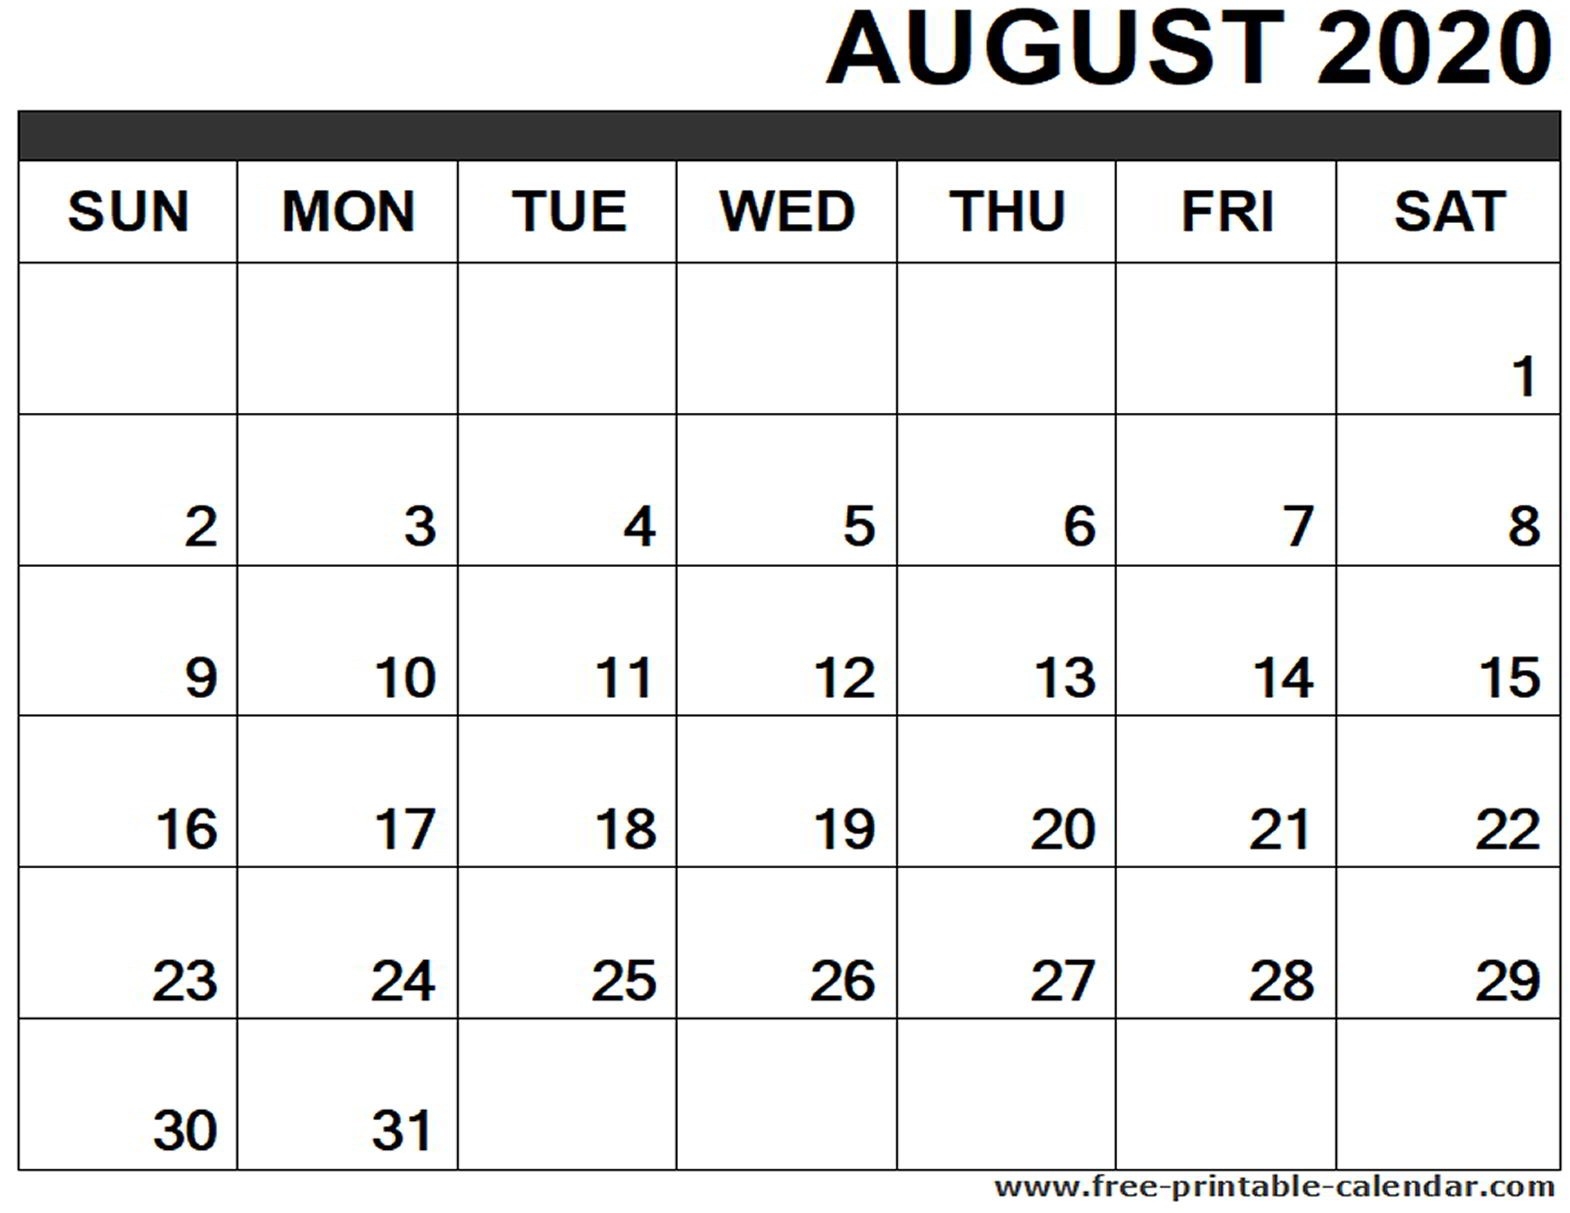 August 2020 Calendar Printable - Free-Printable-Calendar-Free Printable Monthly Calendar August 2020